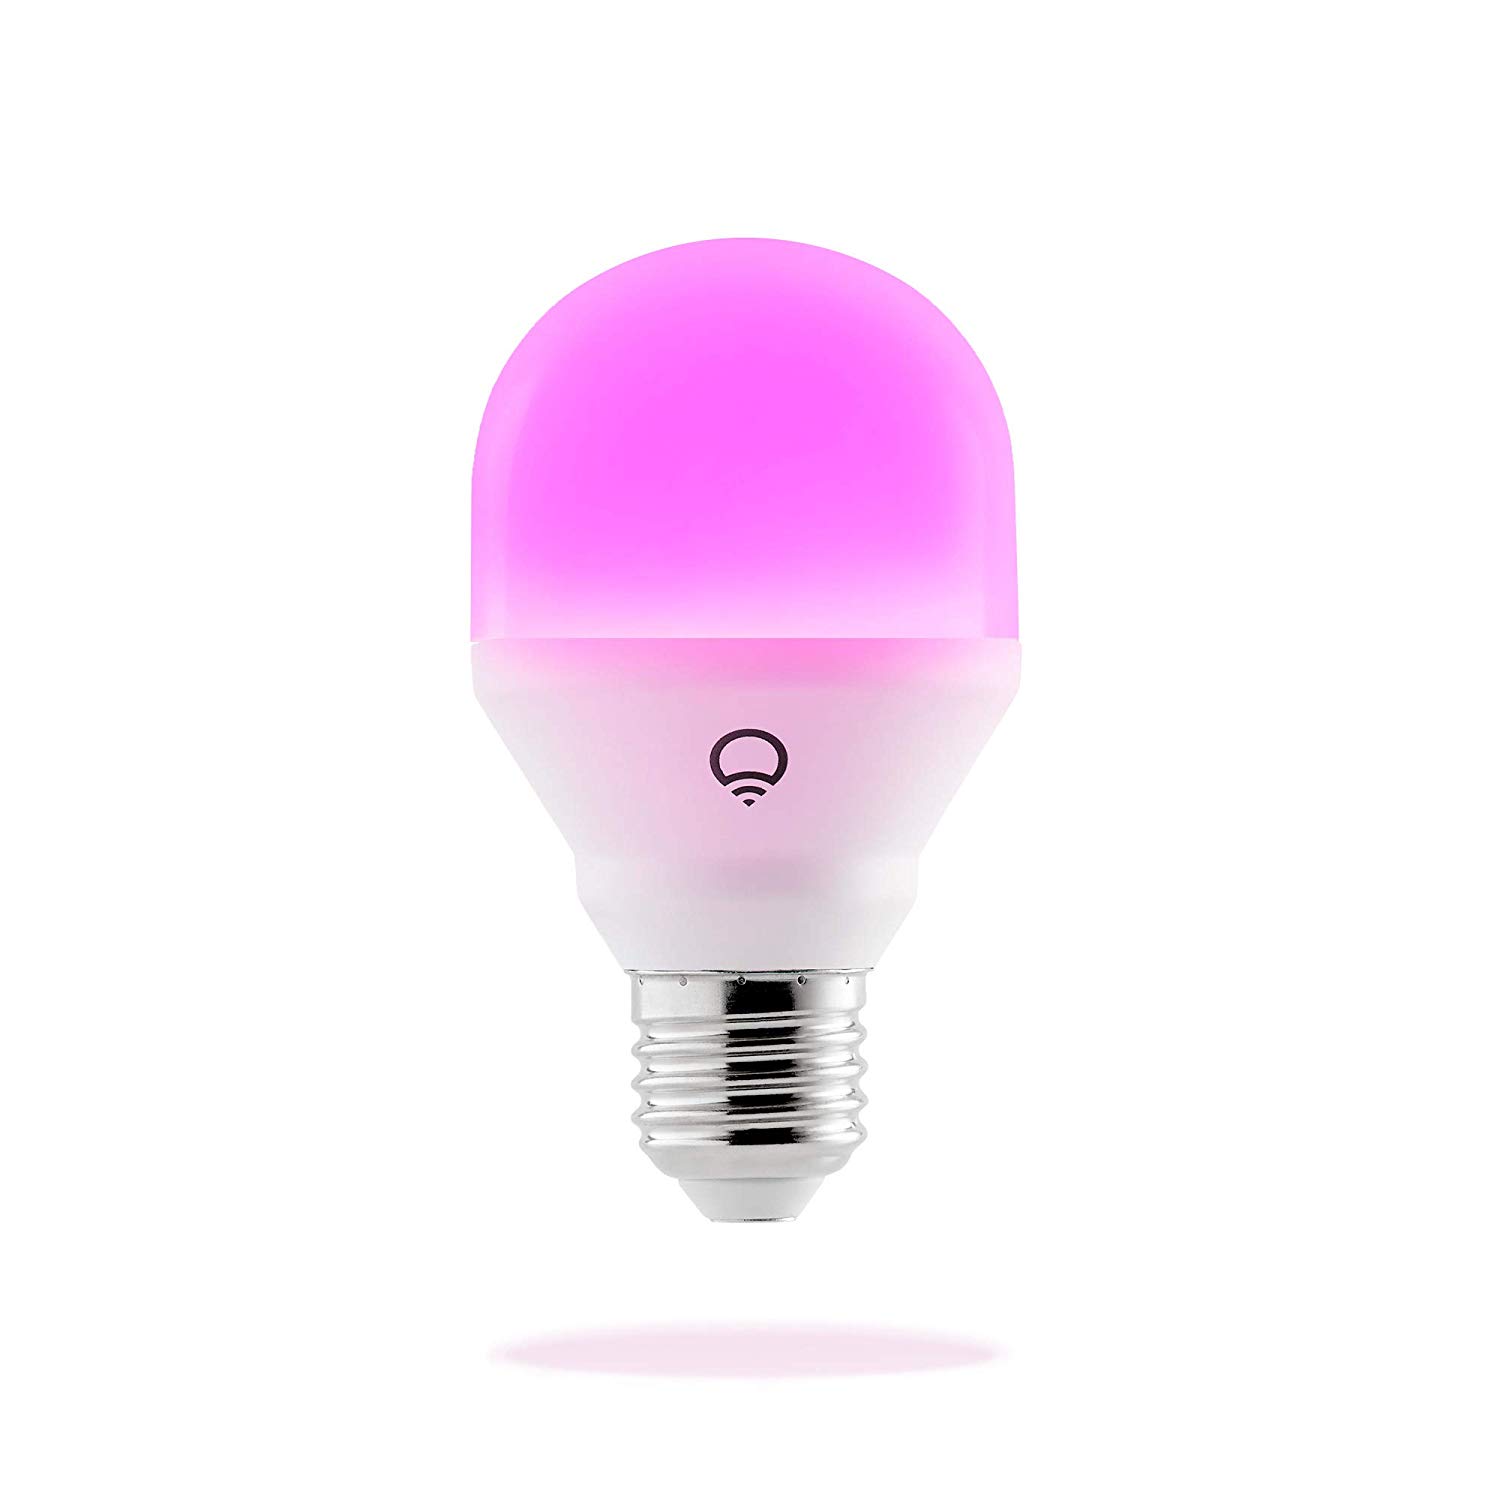 LIFX smart light bulb offers color change to help with autism sensory needs.